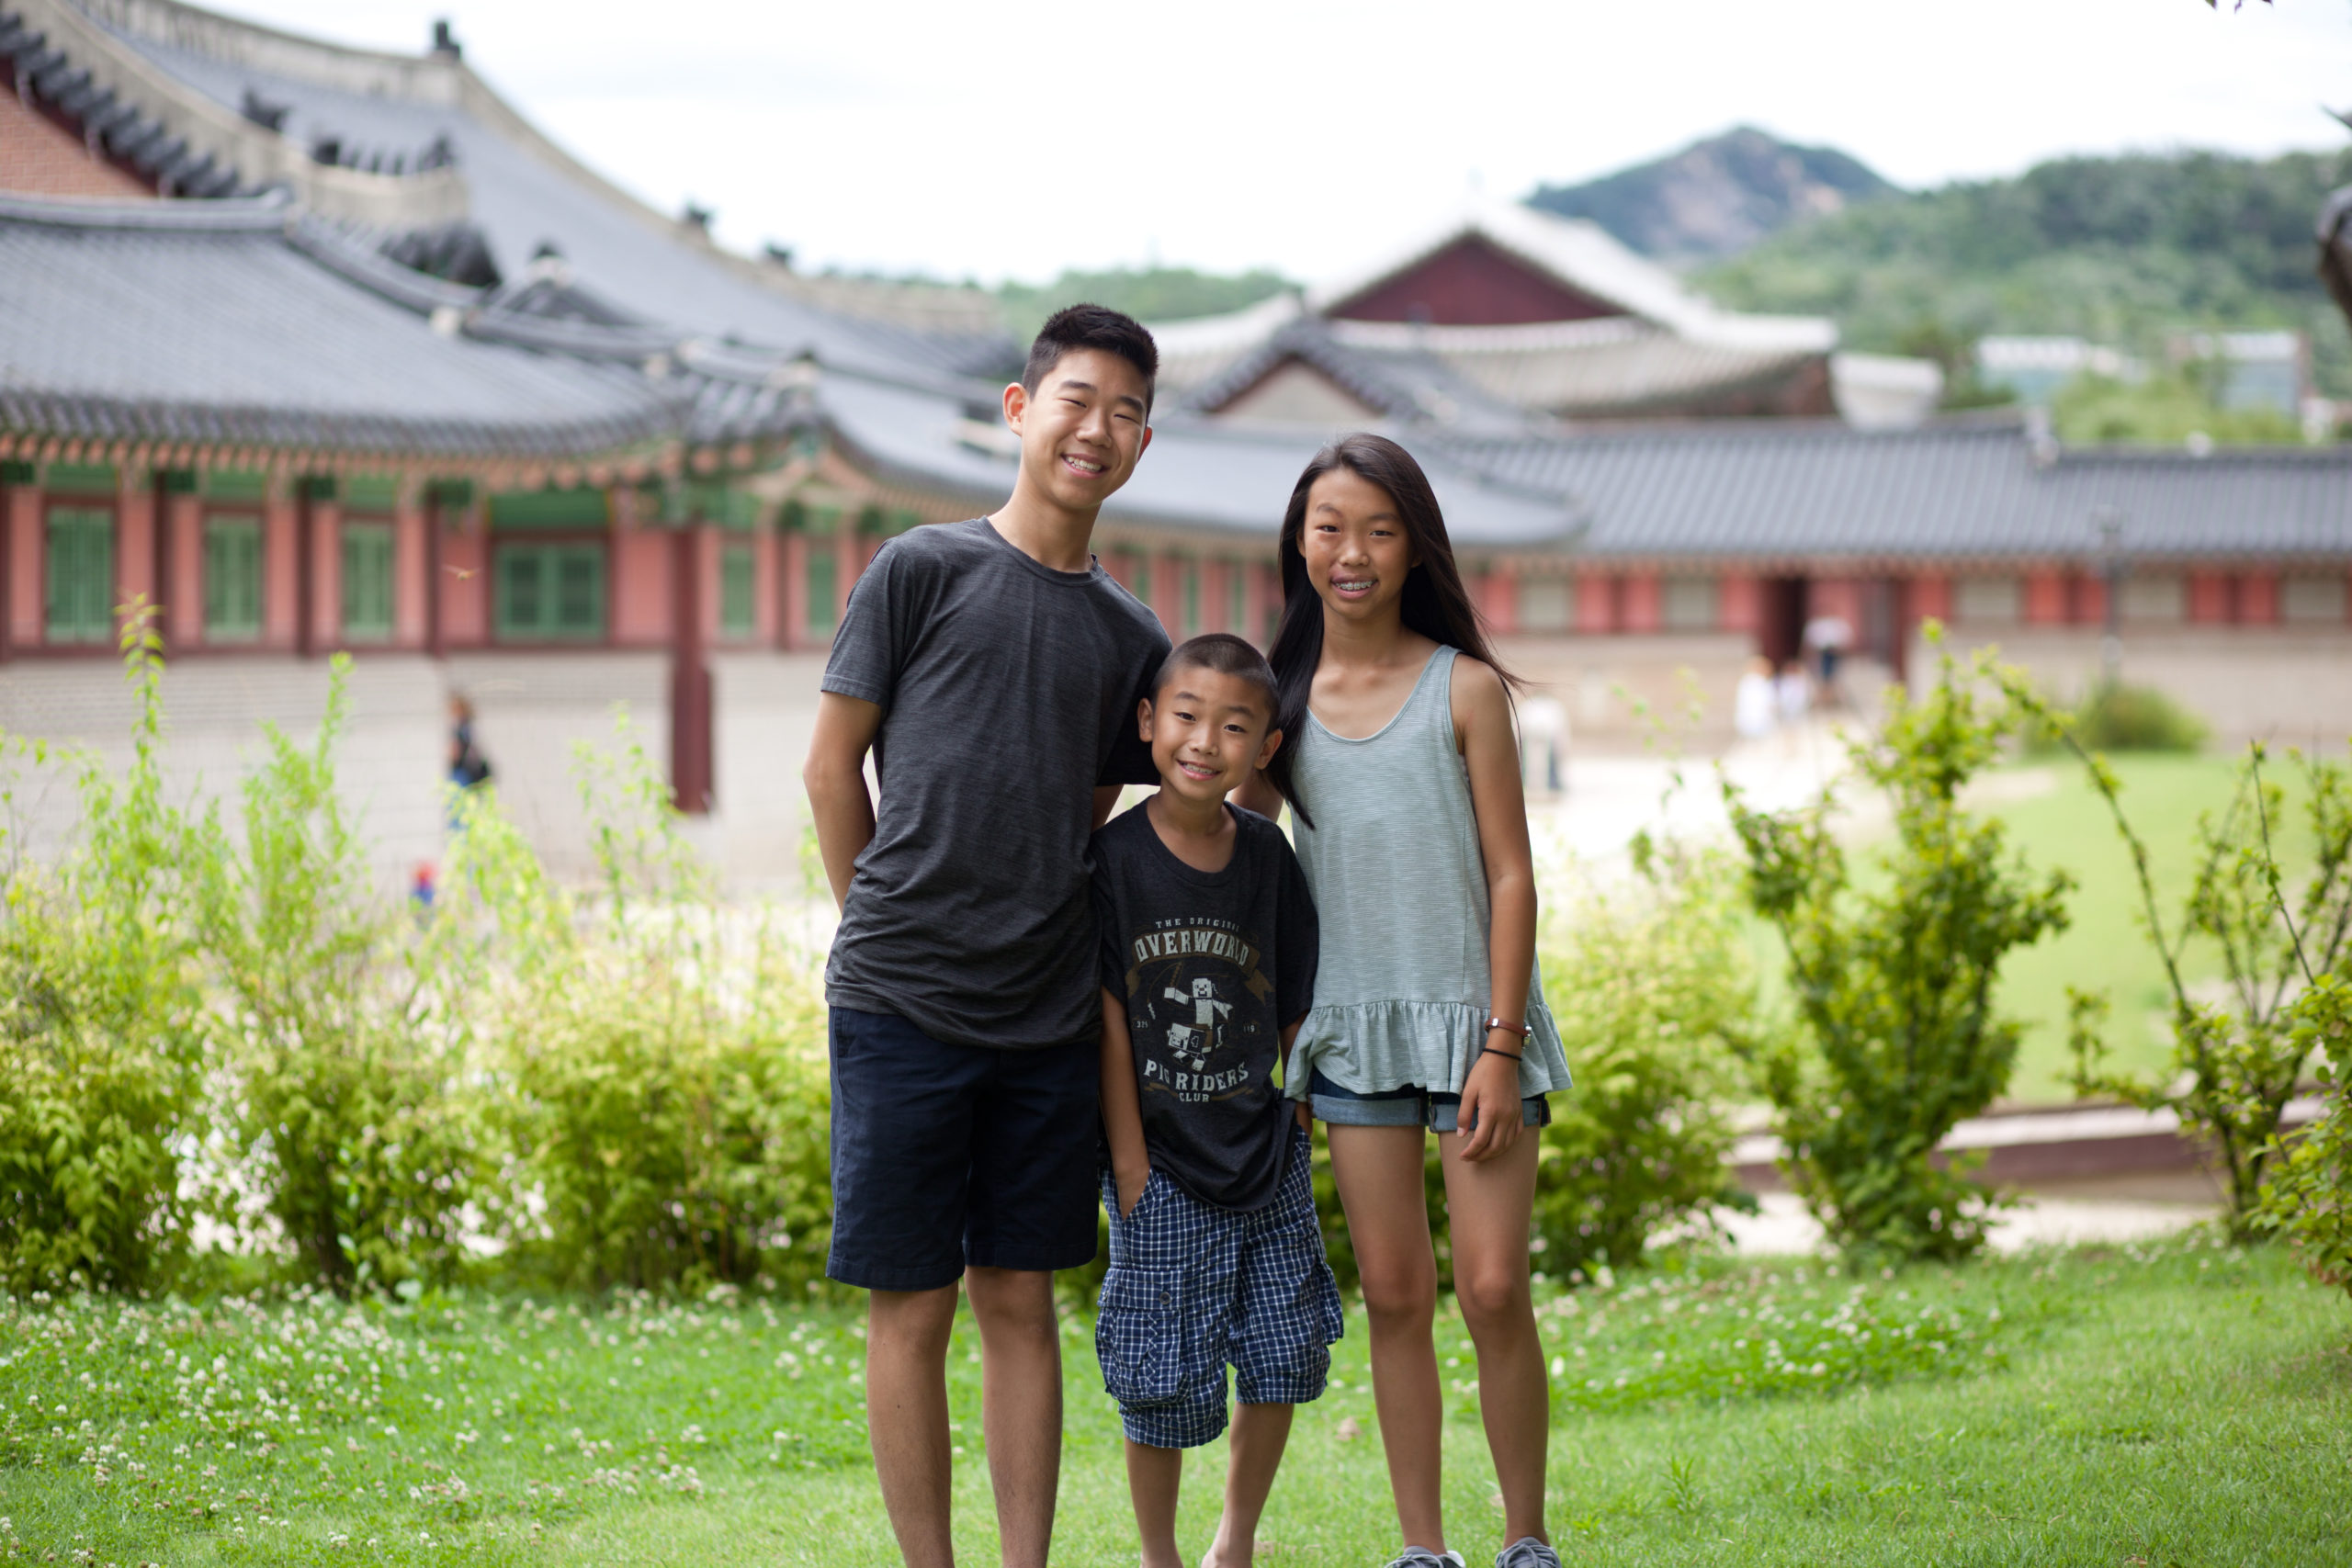 Han family visits South Korea